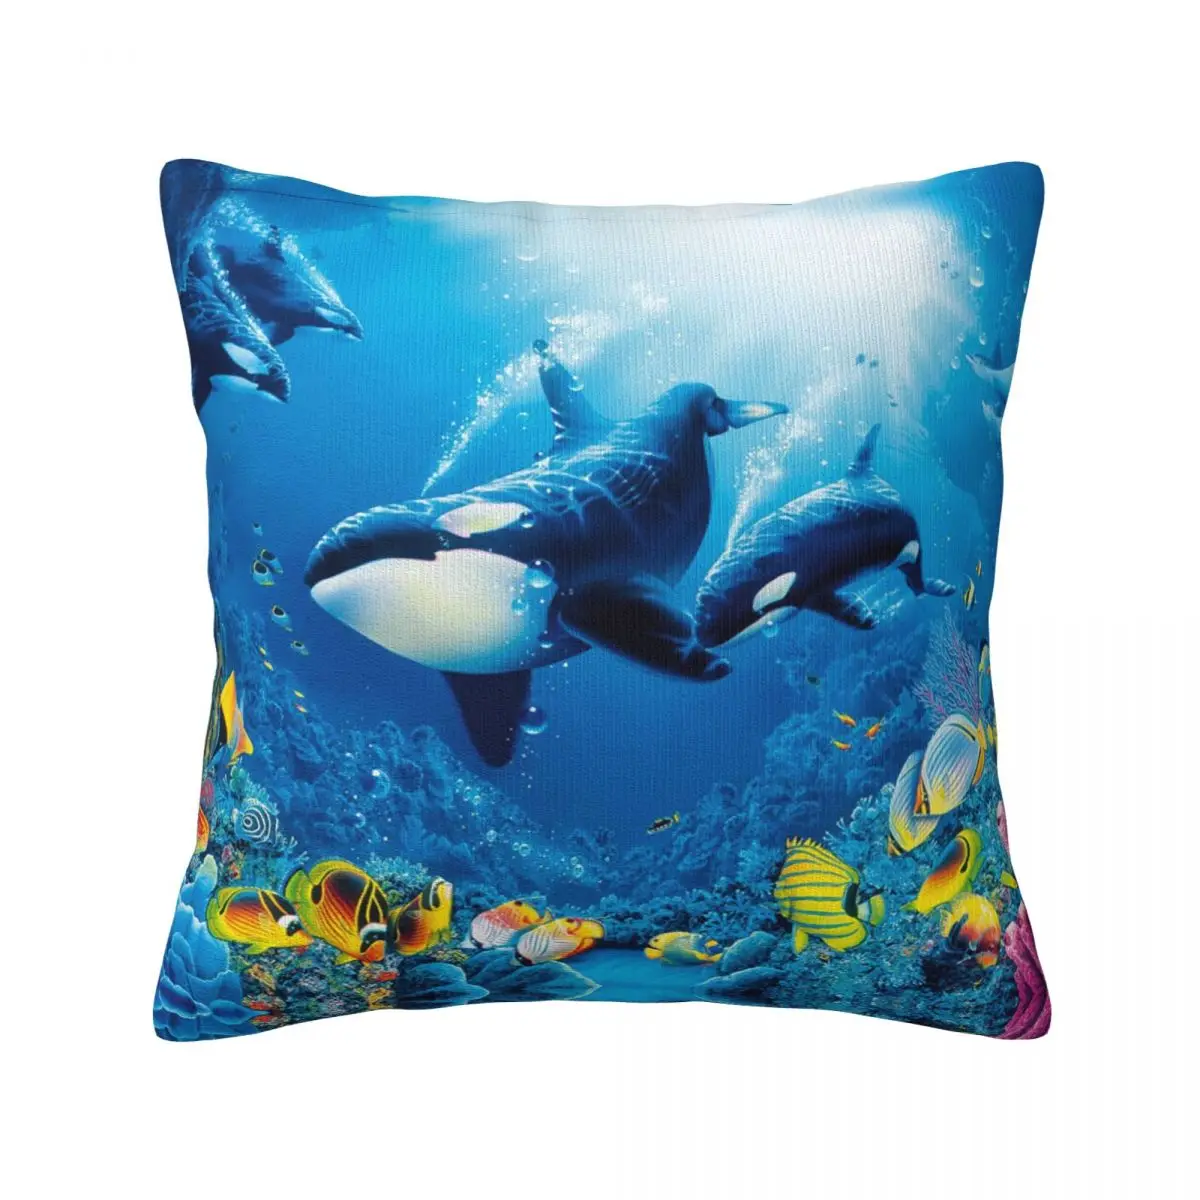 

Whales Orcas Ocean Throw Pillow Cover Decorative Pillow Covers Home Pillows Shells Cushion Cover Zippered Pillowcase